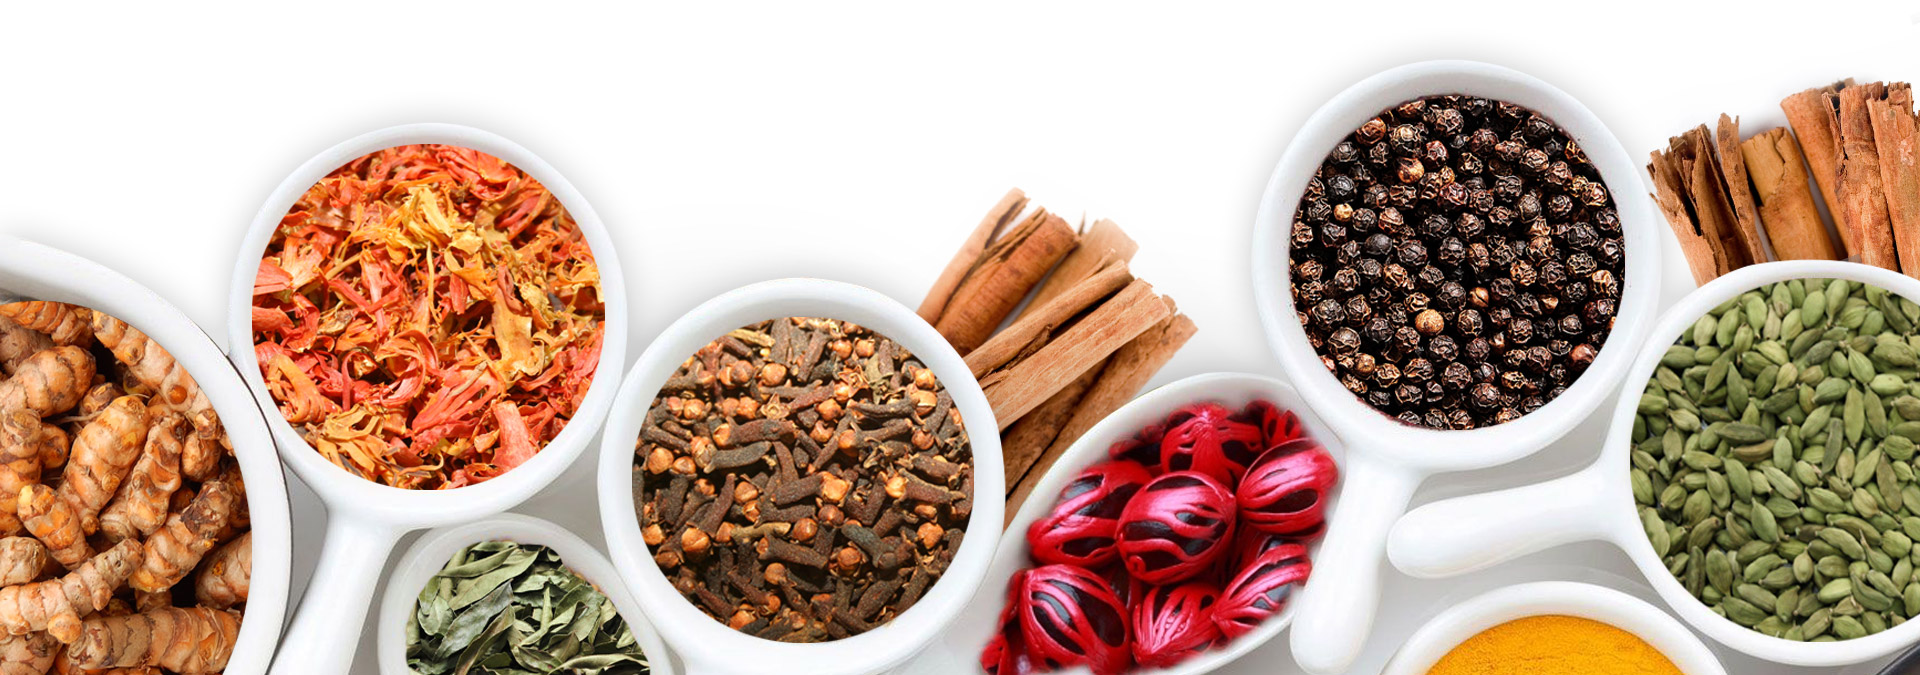 Sri Lanka Exports Development Board (SLEDB) - Spices